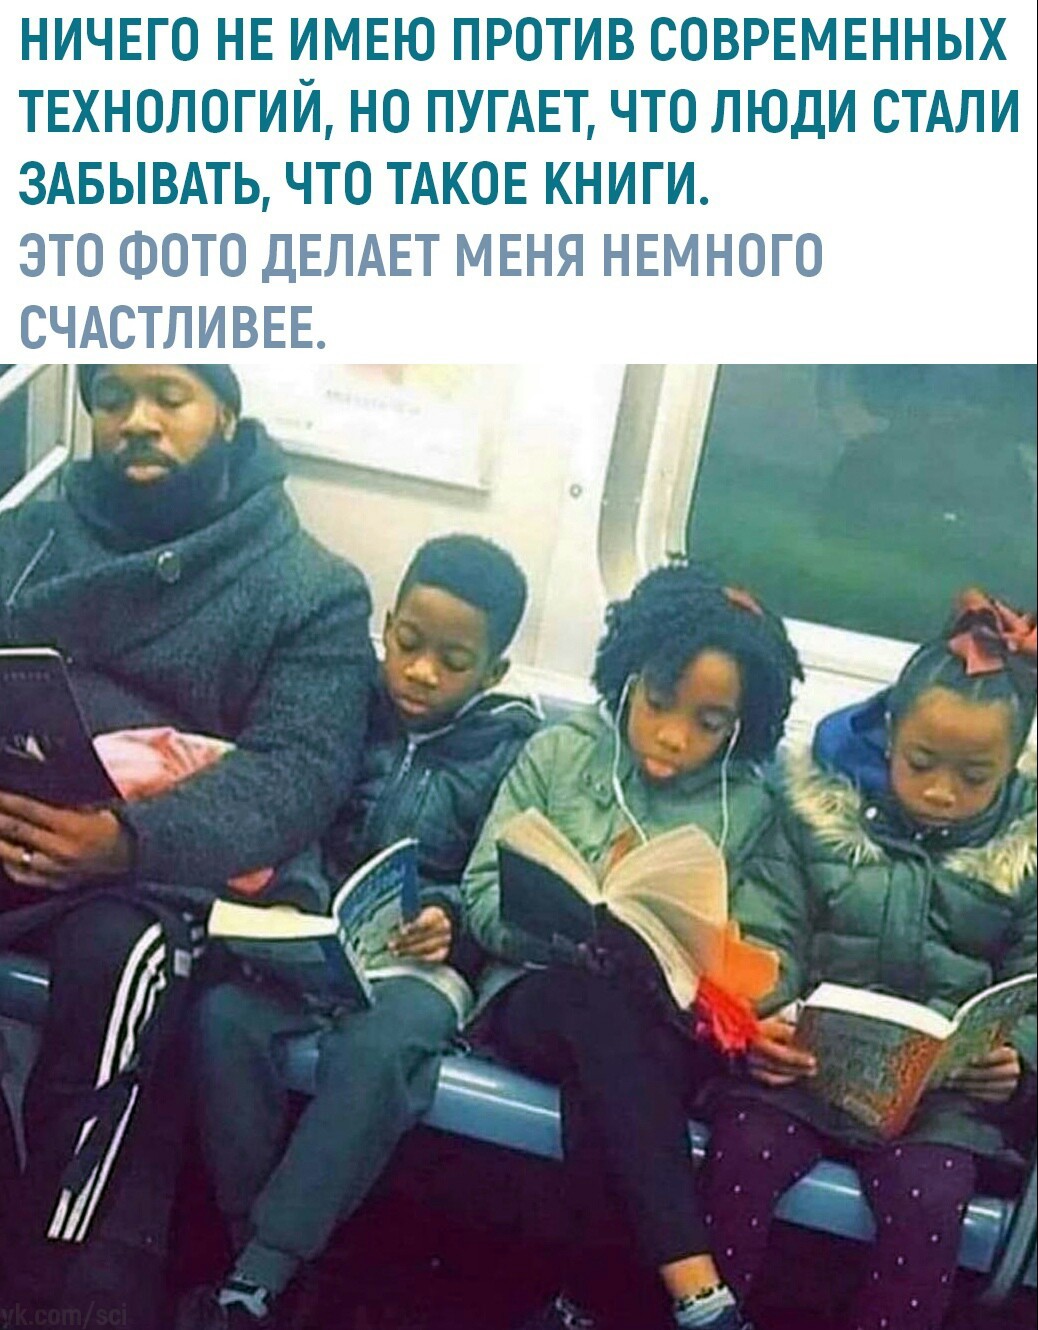 Books - Books, Family